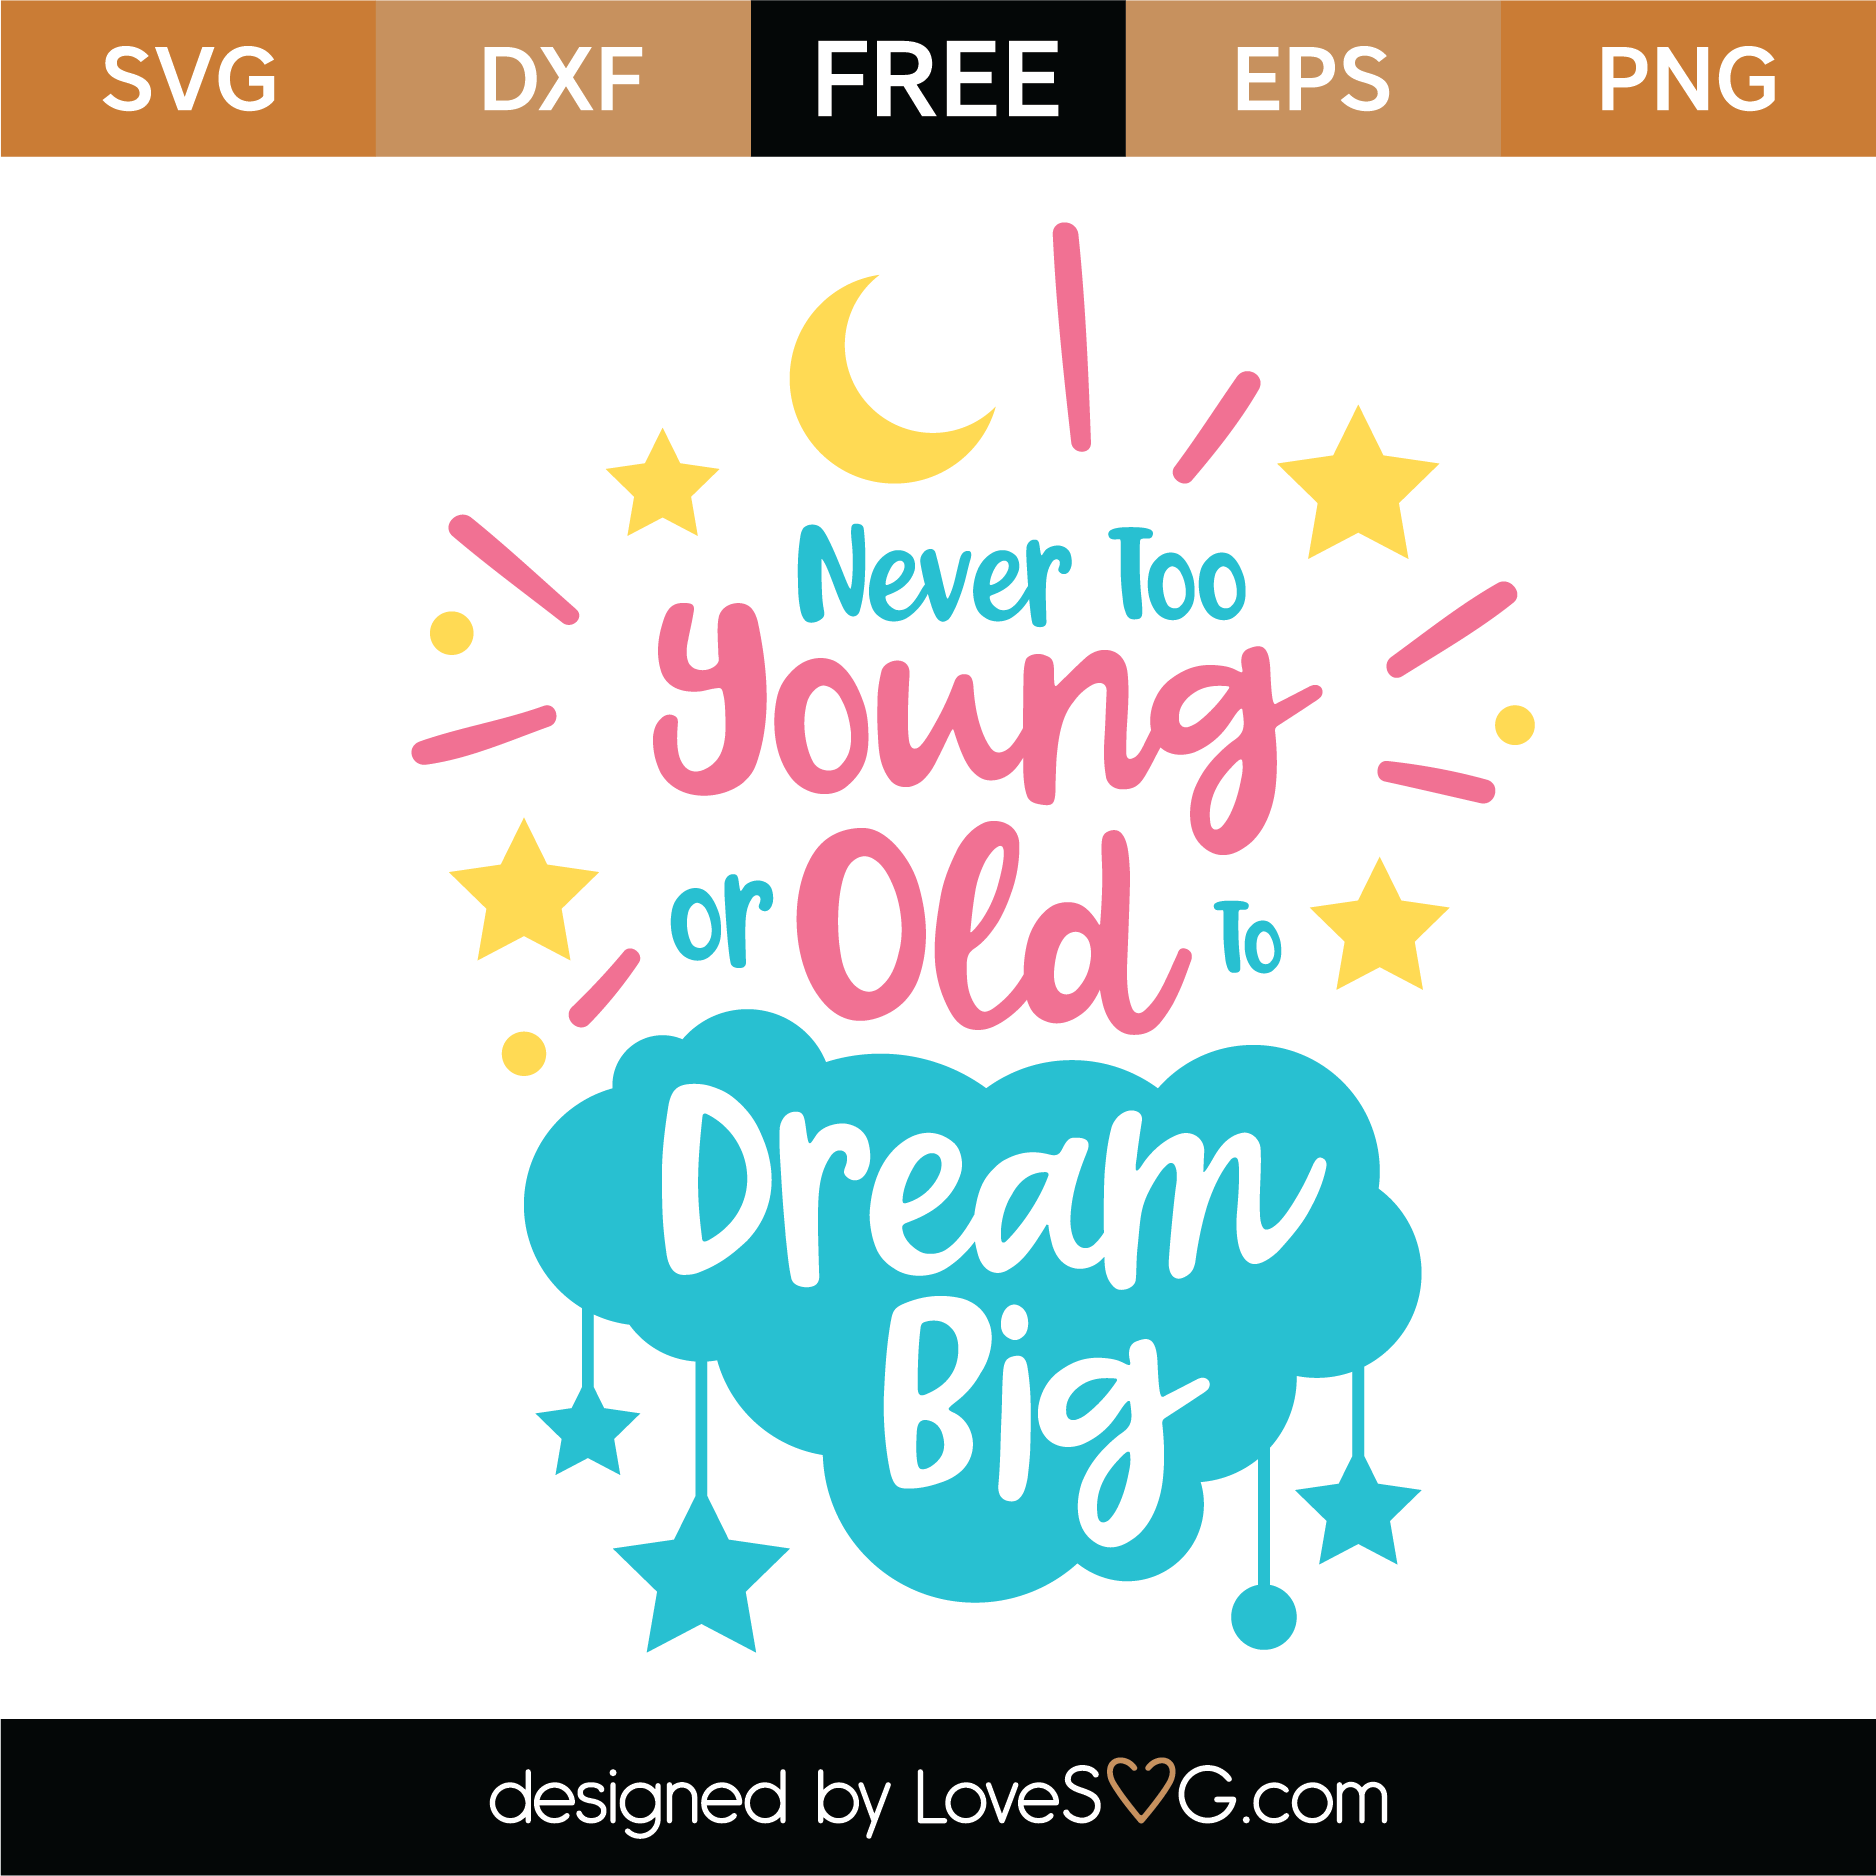 Download Free Dream Big SVG Cut File | Lovesvg.com